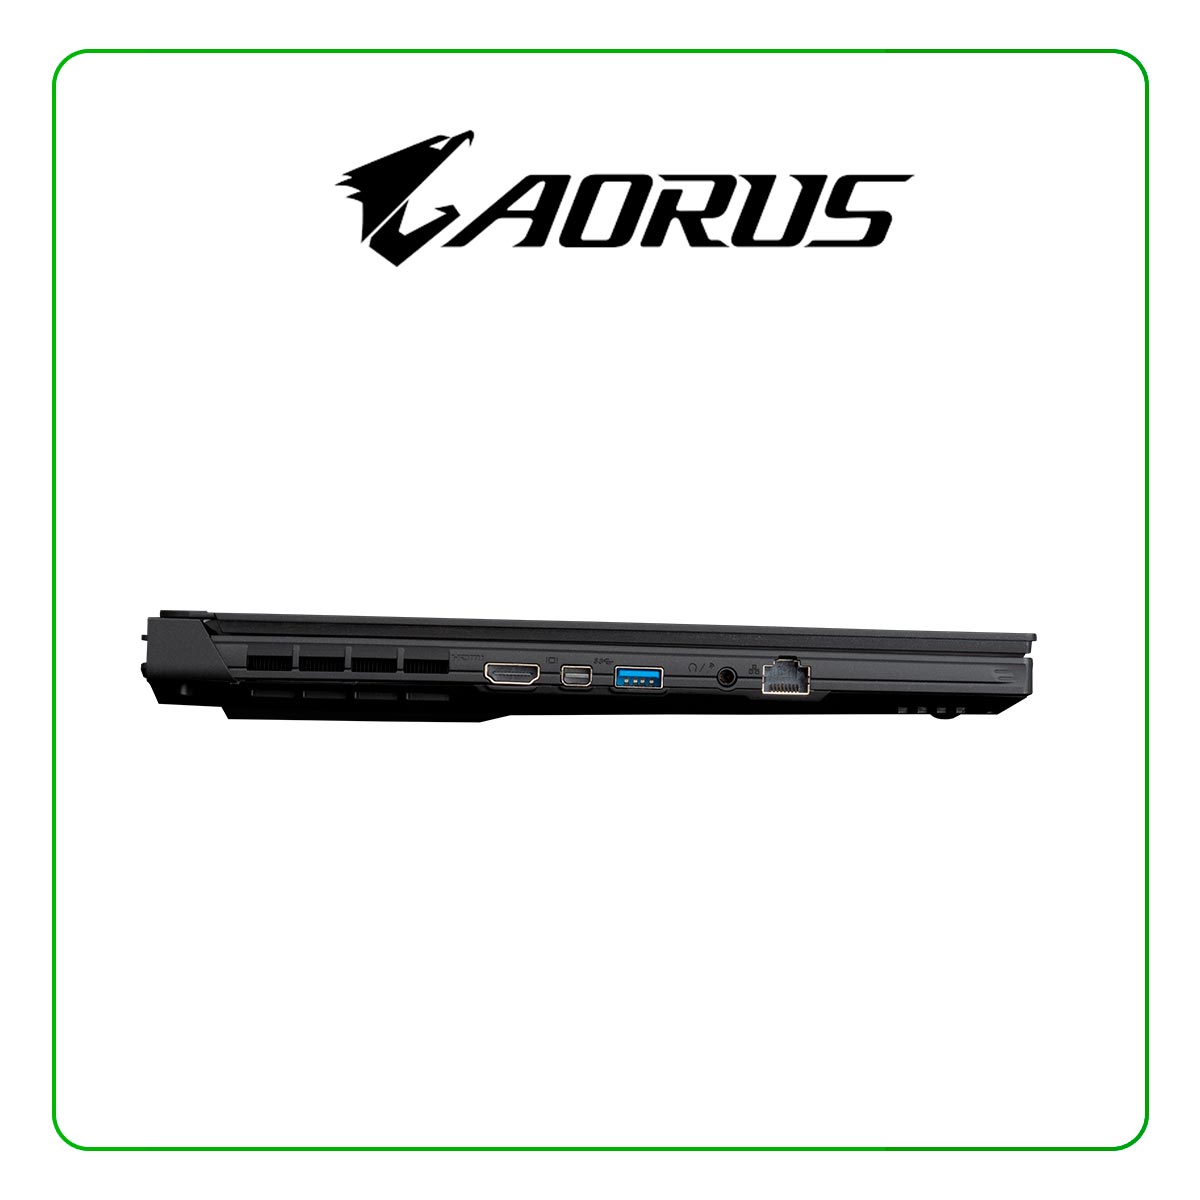 LAPTOP GIGABYTE AORUS 5 SE4-73US213SH INTEL CORE I7 12700H / 16GB RAM / 512 SSD / 15.6"FHD (1920X1080), 144HZ / NVIDIA GEFORCE RTX 3070 8GB / WINDOWS 11